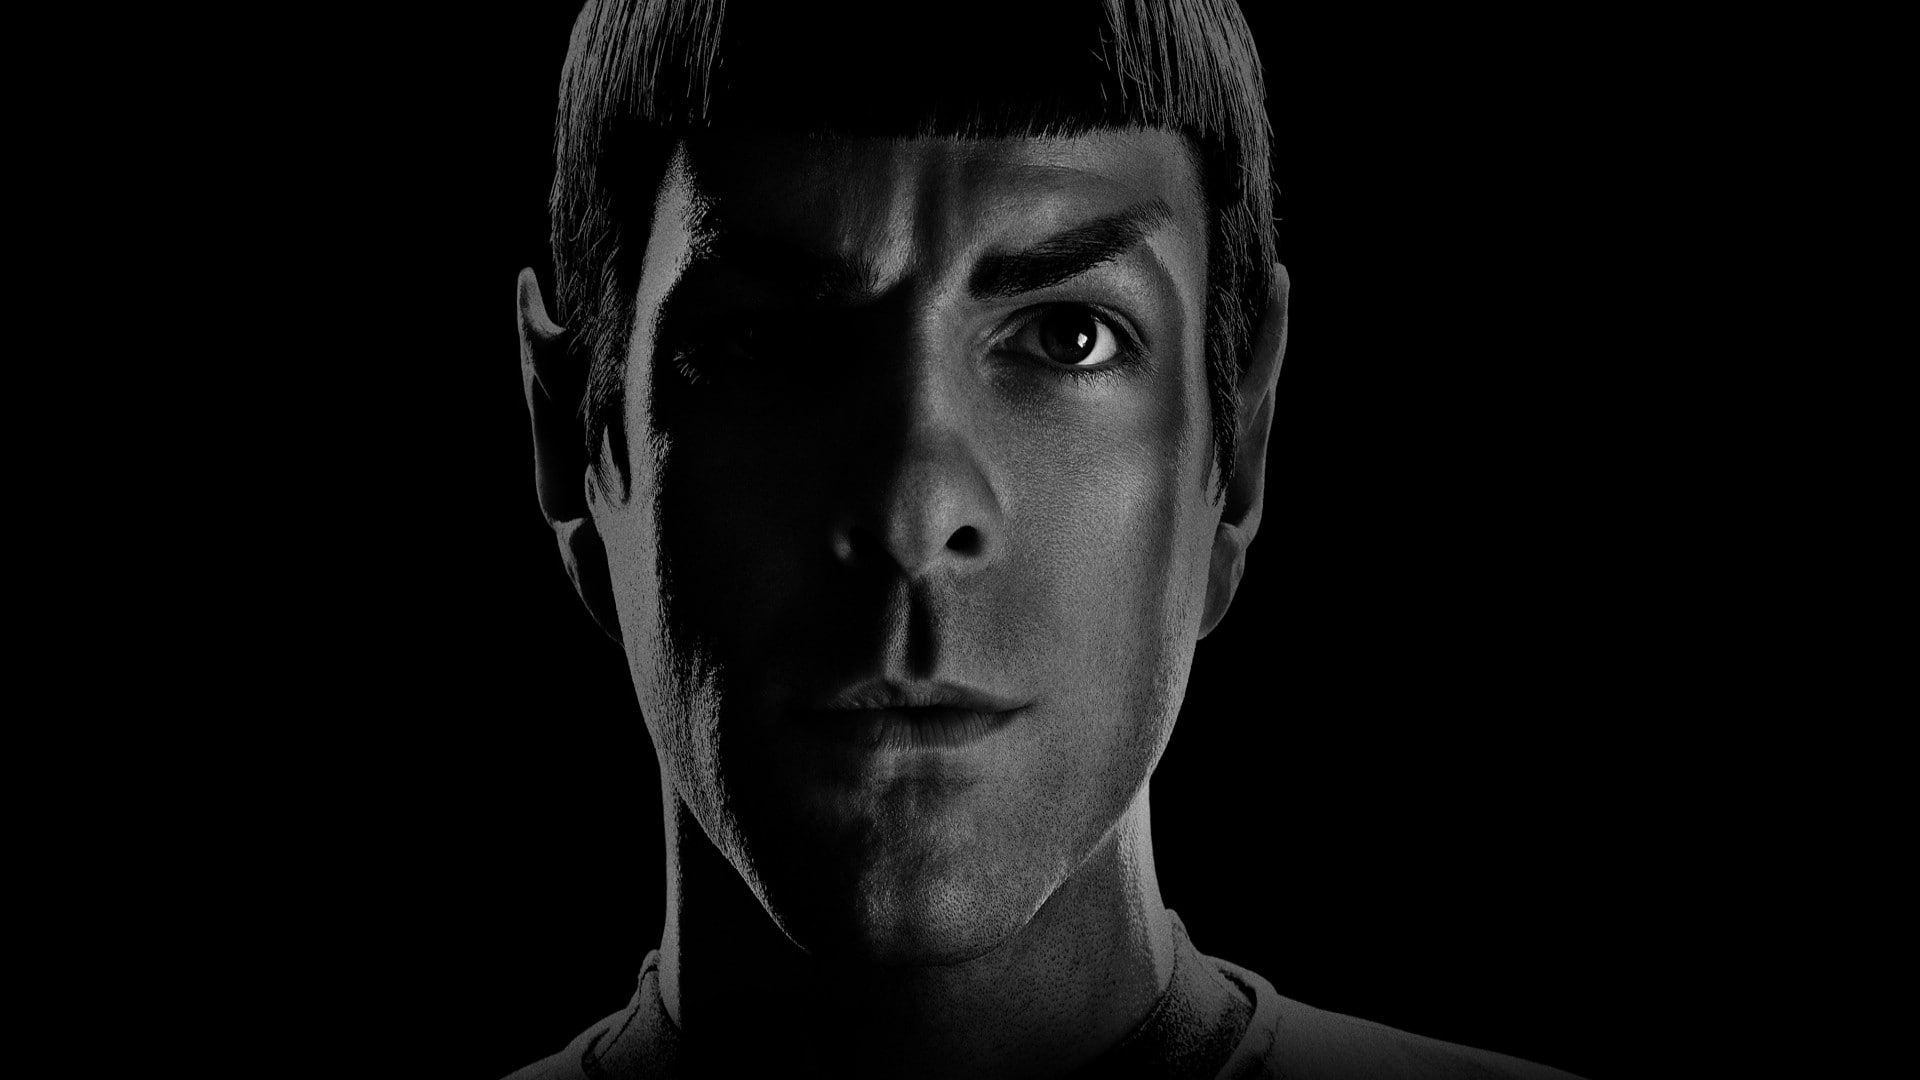 Star Trek, Spock, portrait, studio shot, headshot, one person